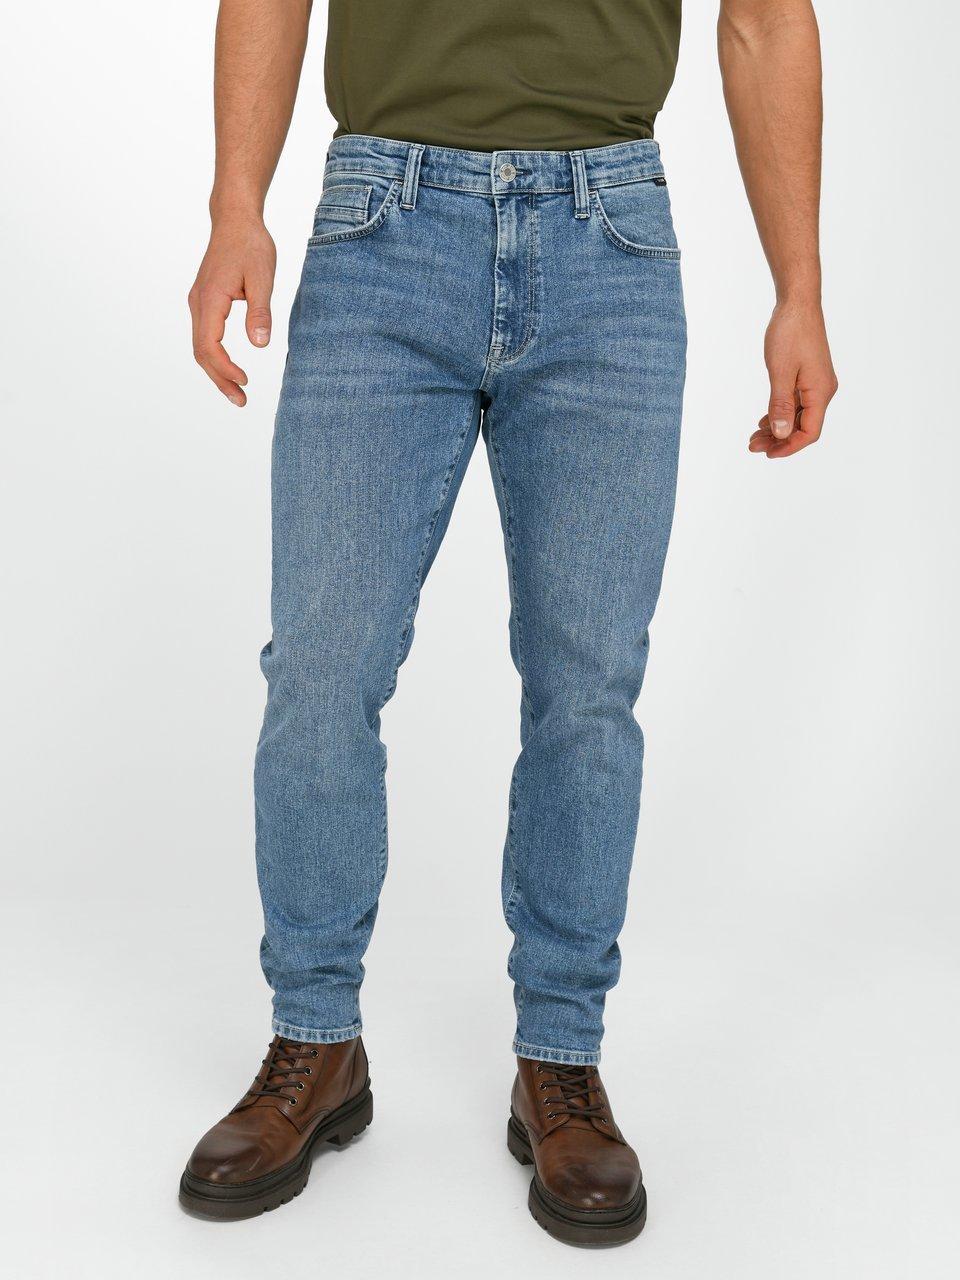 MAVI - Jeans in Inch-Länge 30